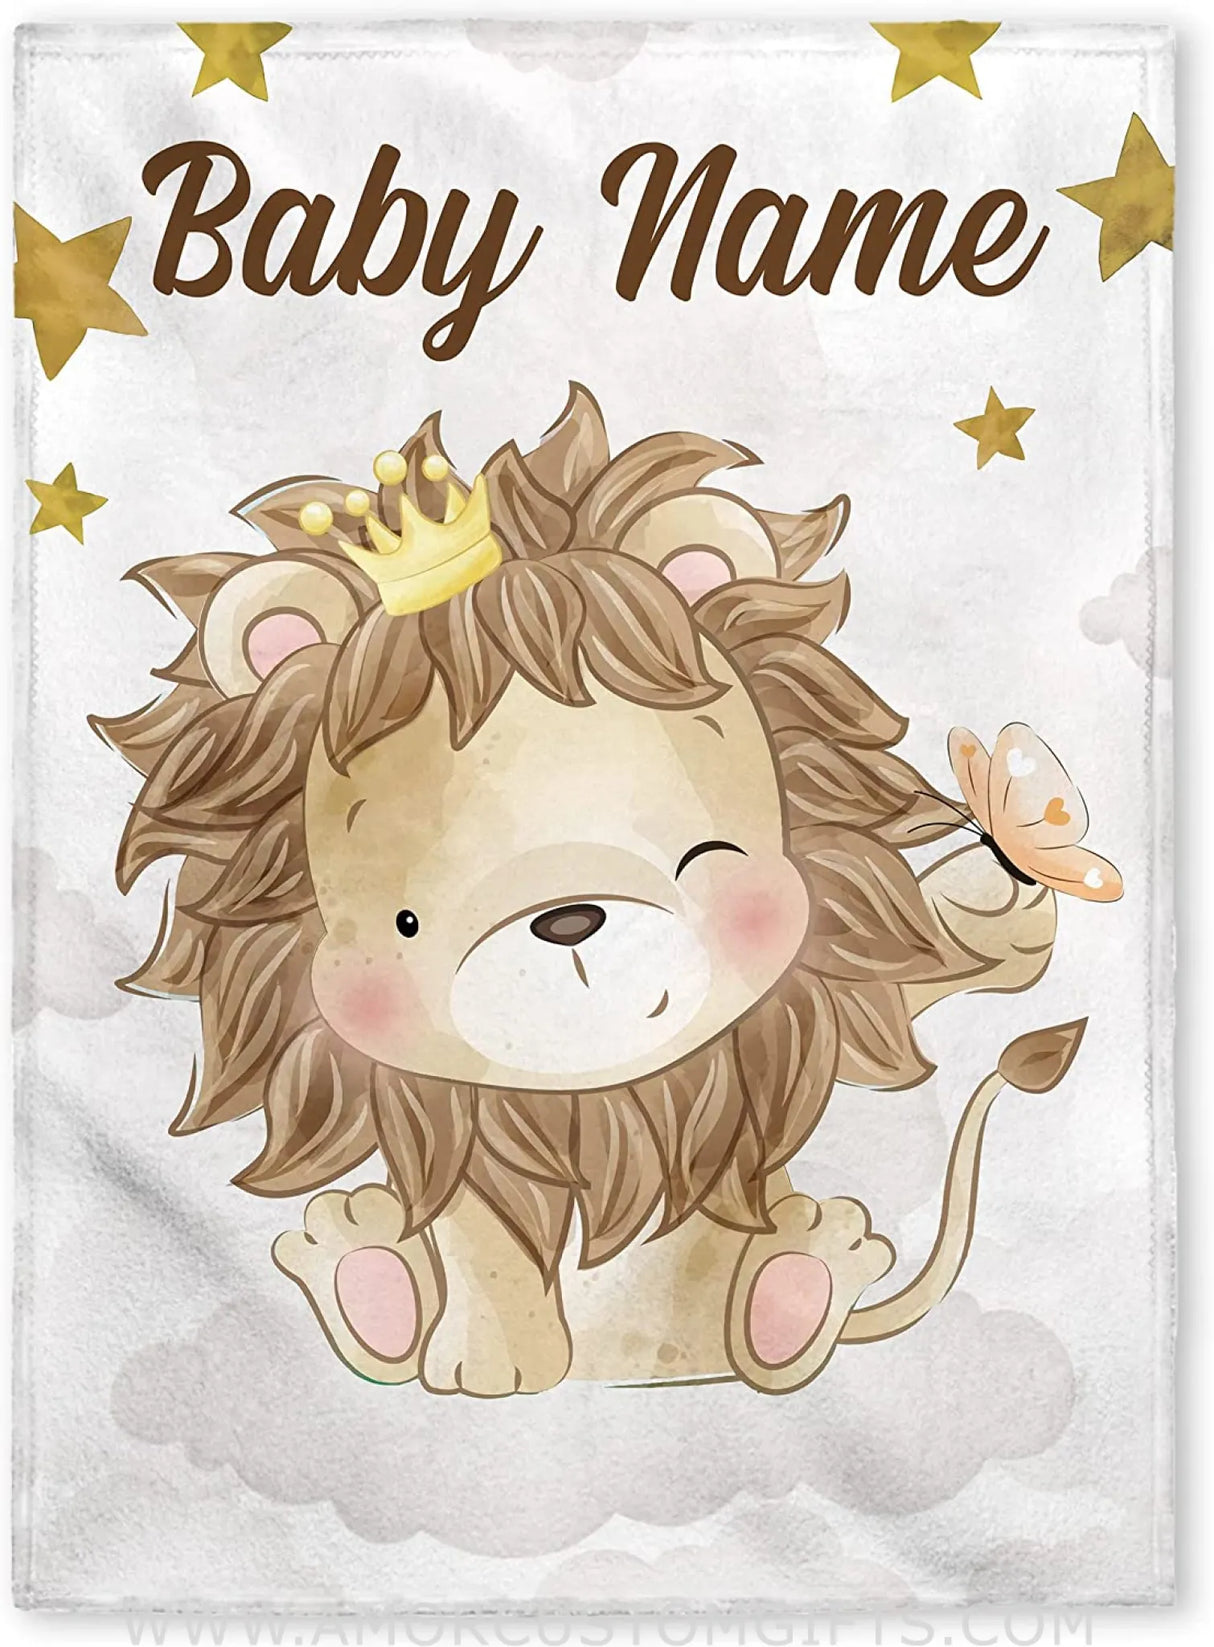 Blankets USA MADE Personalized Baby Blankets, Custom Baby Blanket - Baby Blanket with Name for Boys, Best Gift for Baby, Newborn Lion Flush Fleece blanket